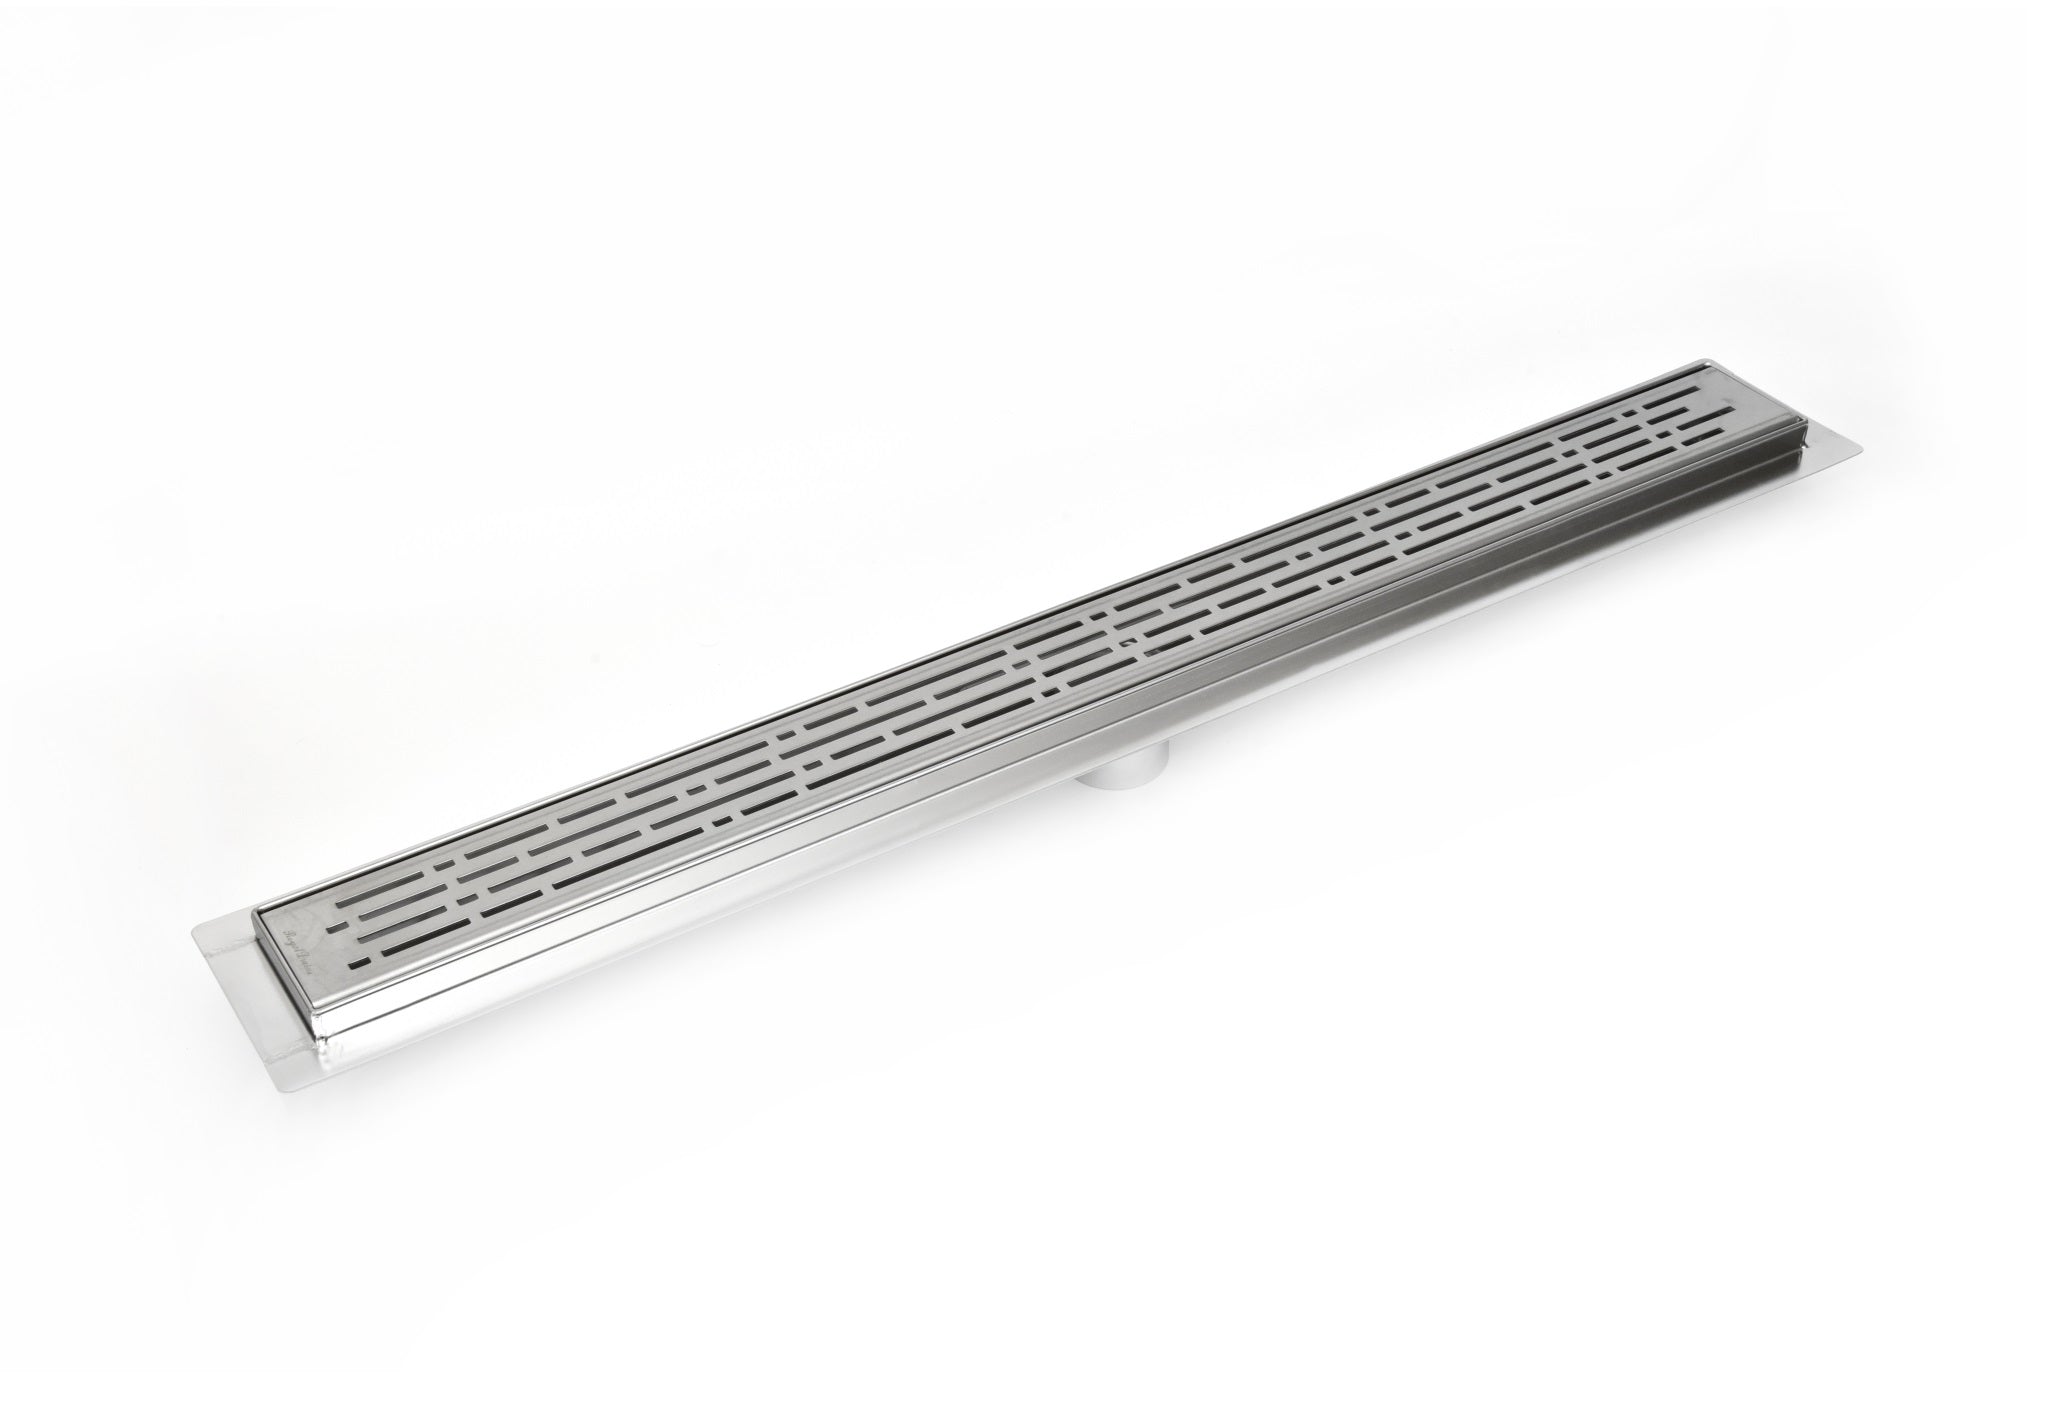 59 Inch Linear Shower Drain Polished Chrome Broken Lane Design by SereneDrains